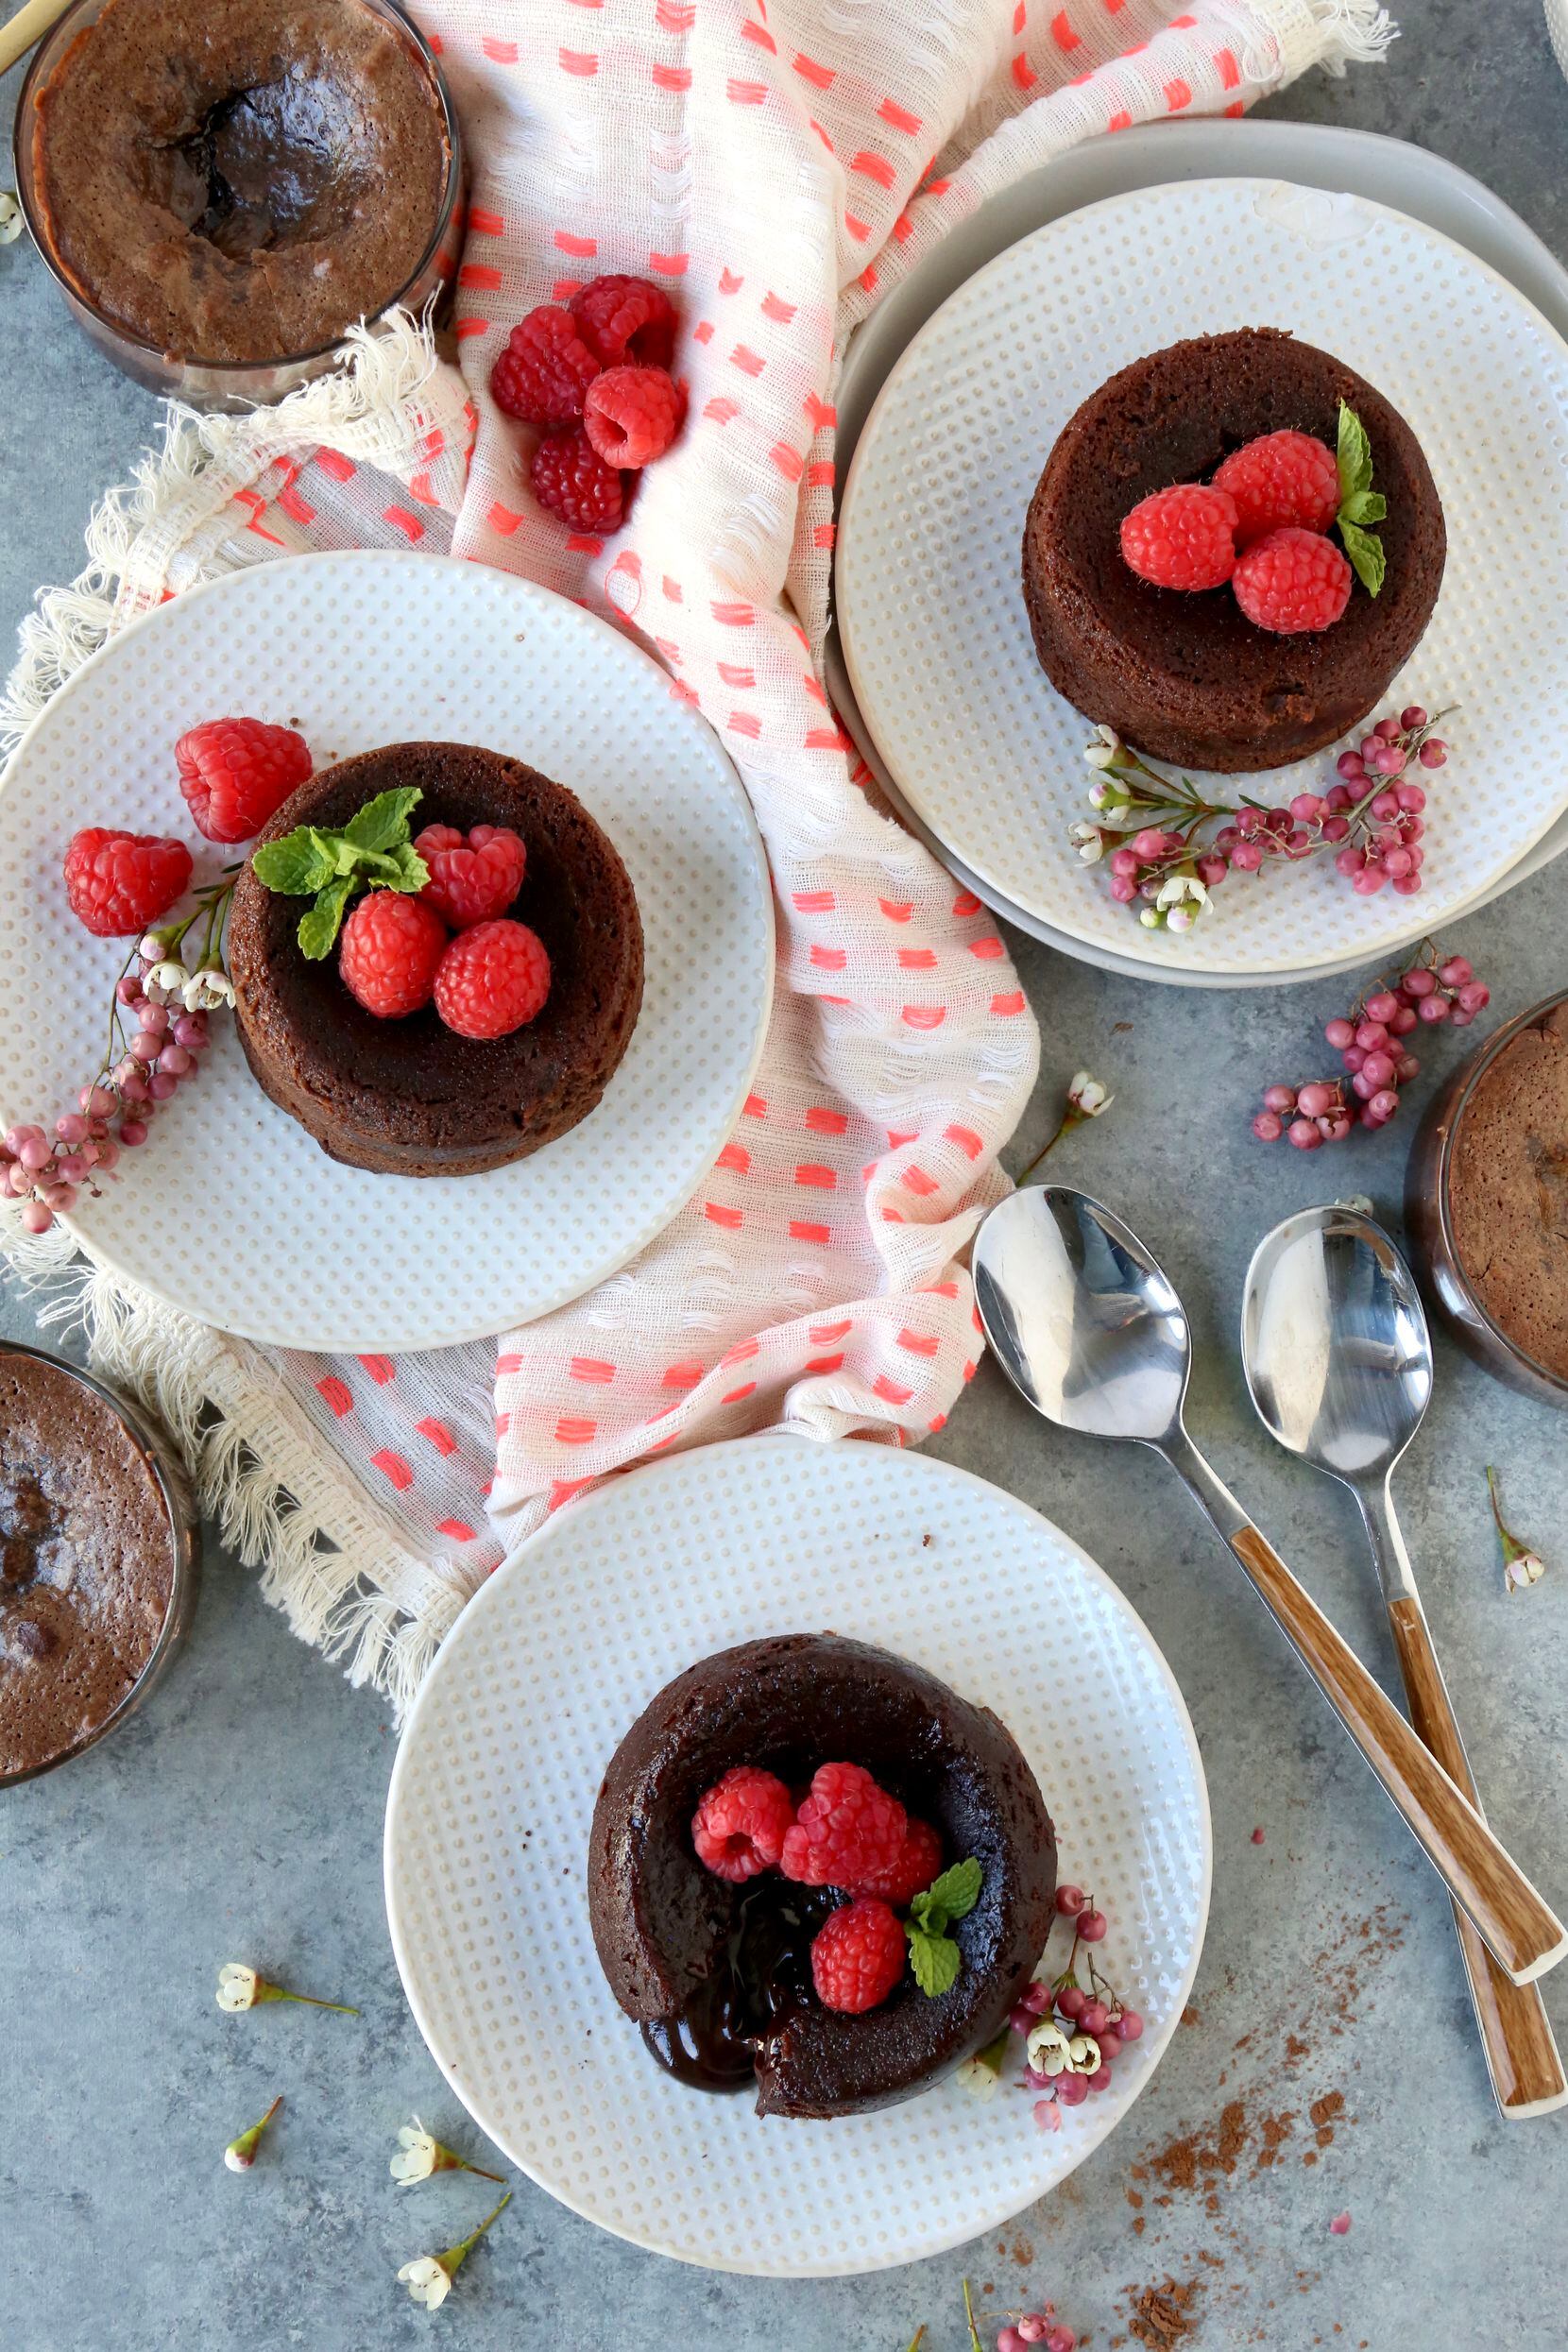 Flourless Melted Chocolate Cake by Kristen Massad